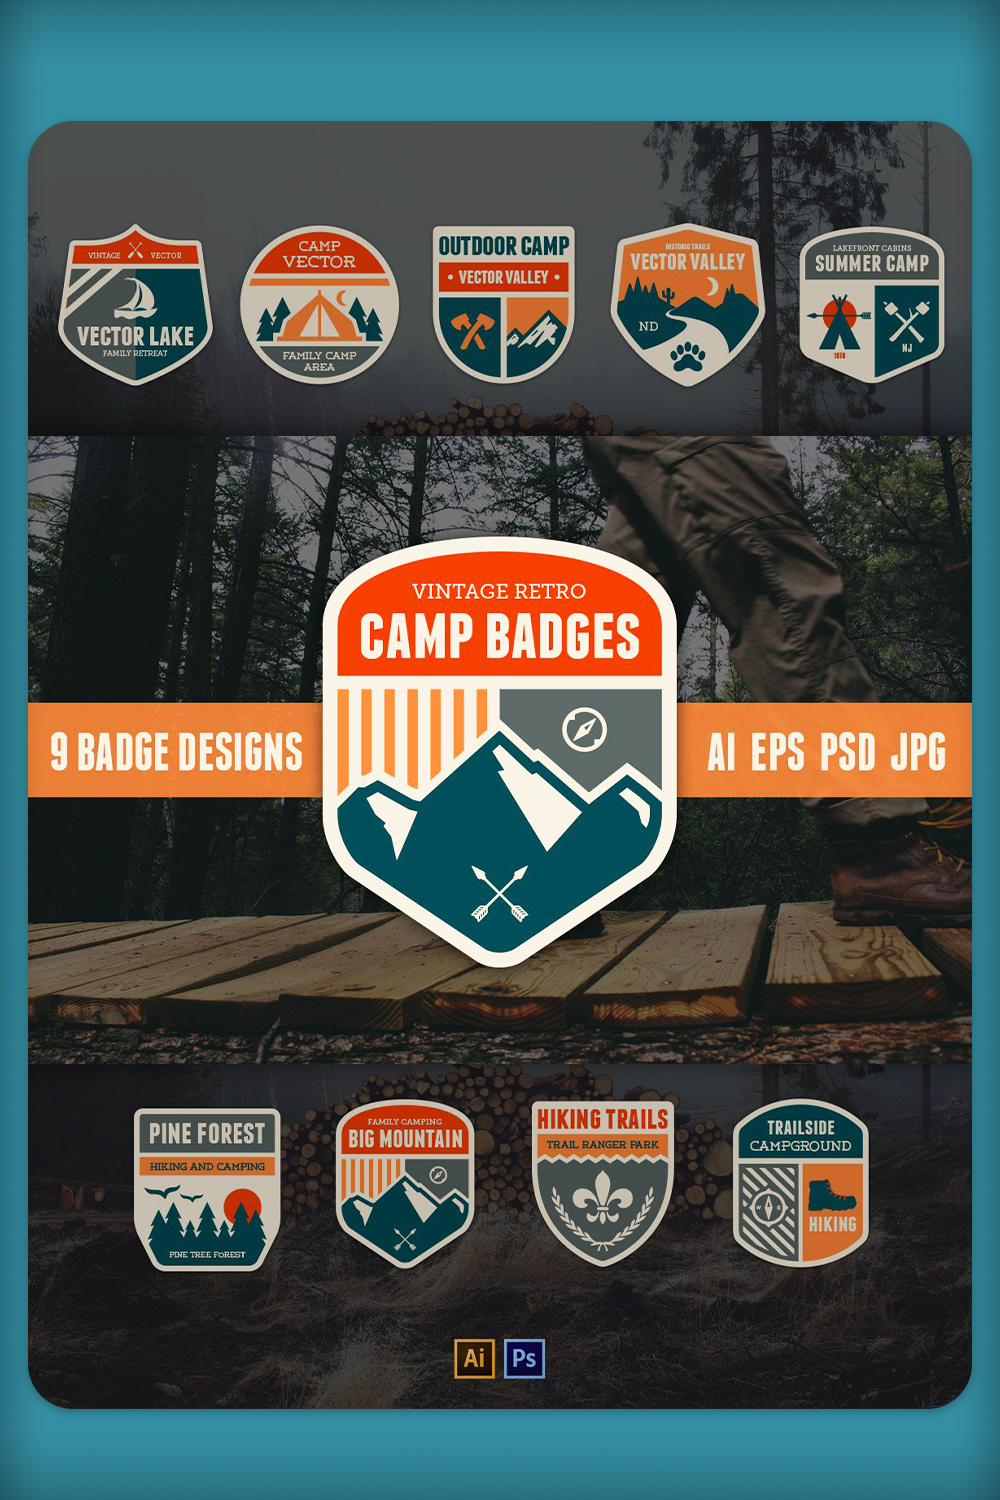 Retro Camp Badges Pinterest image.